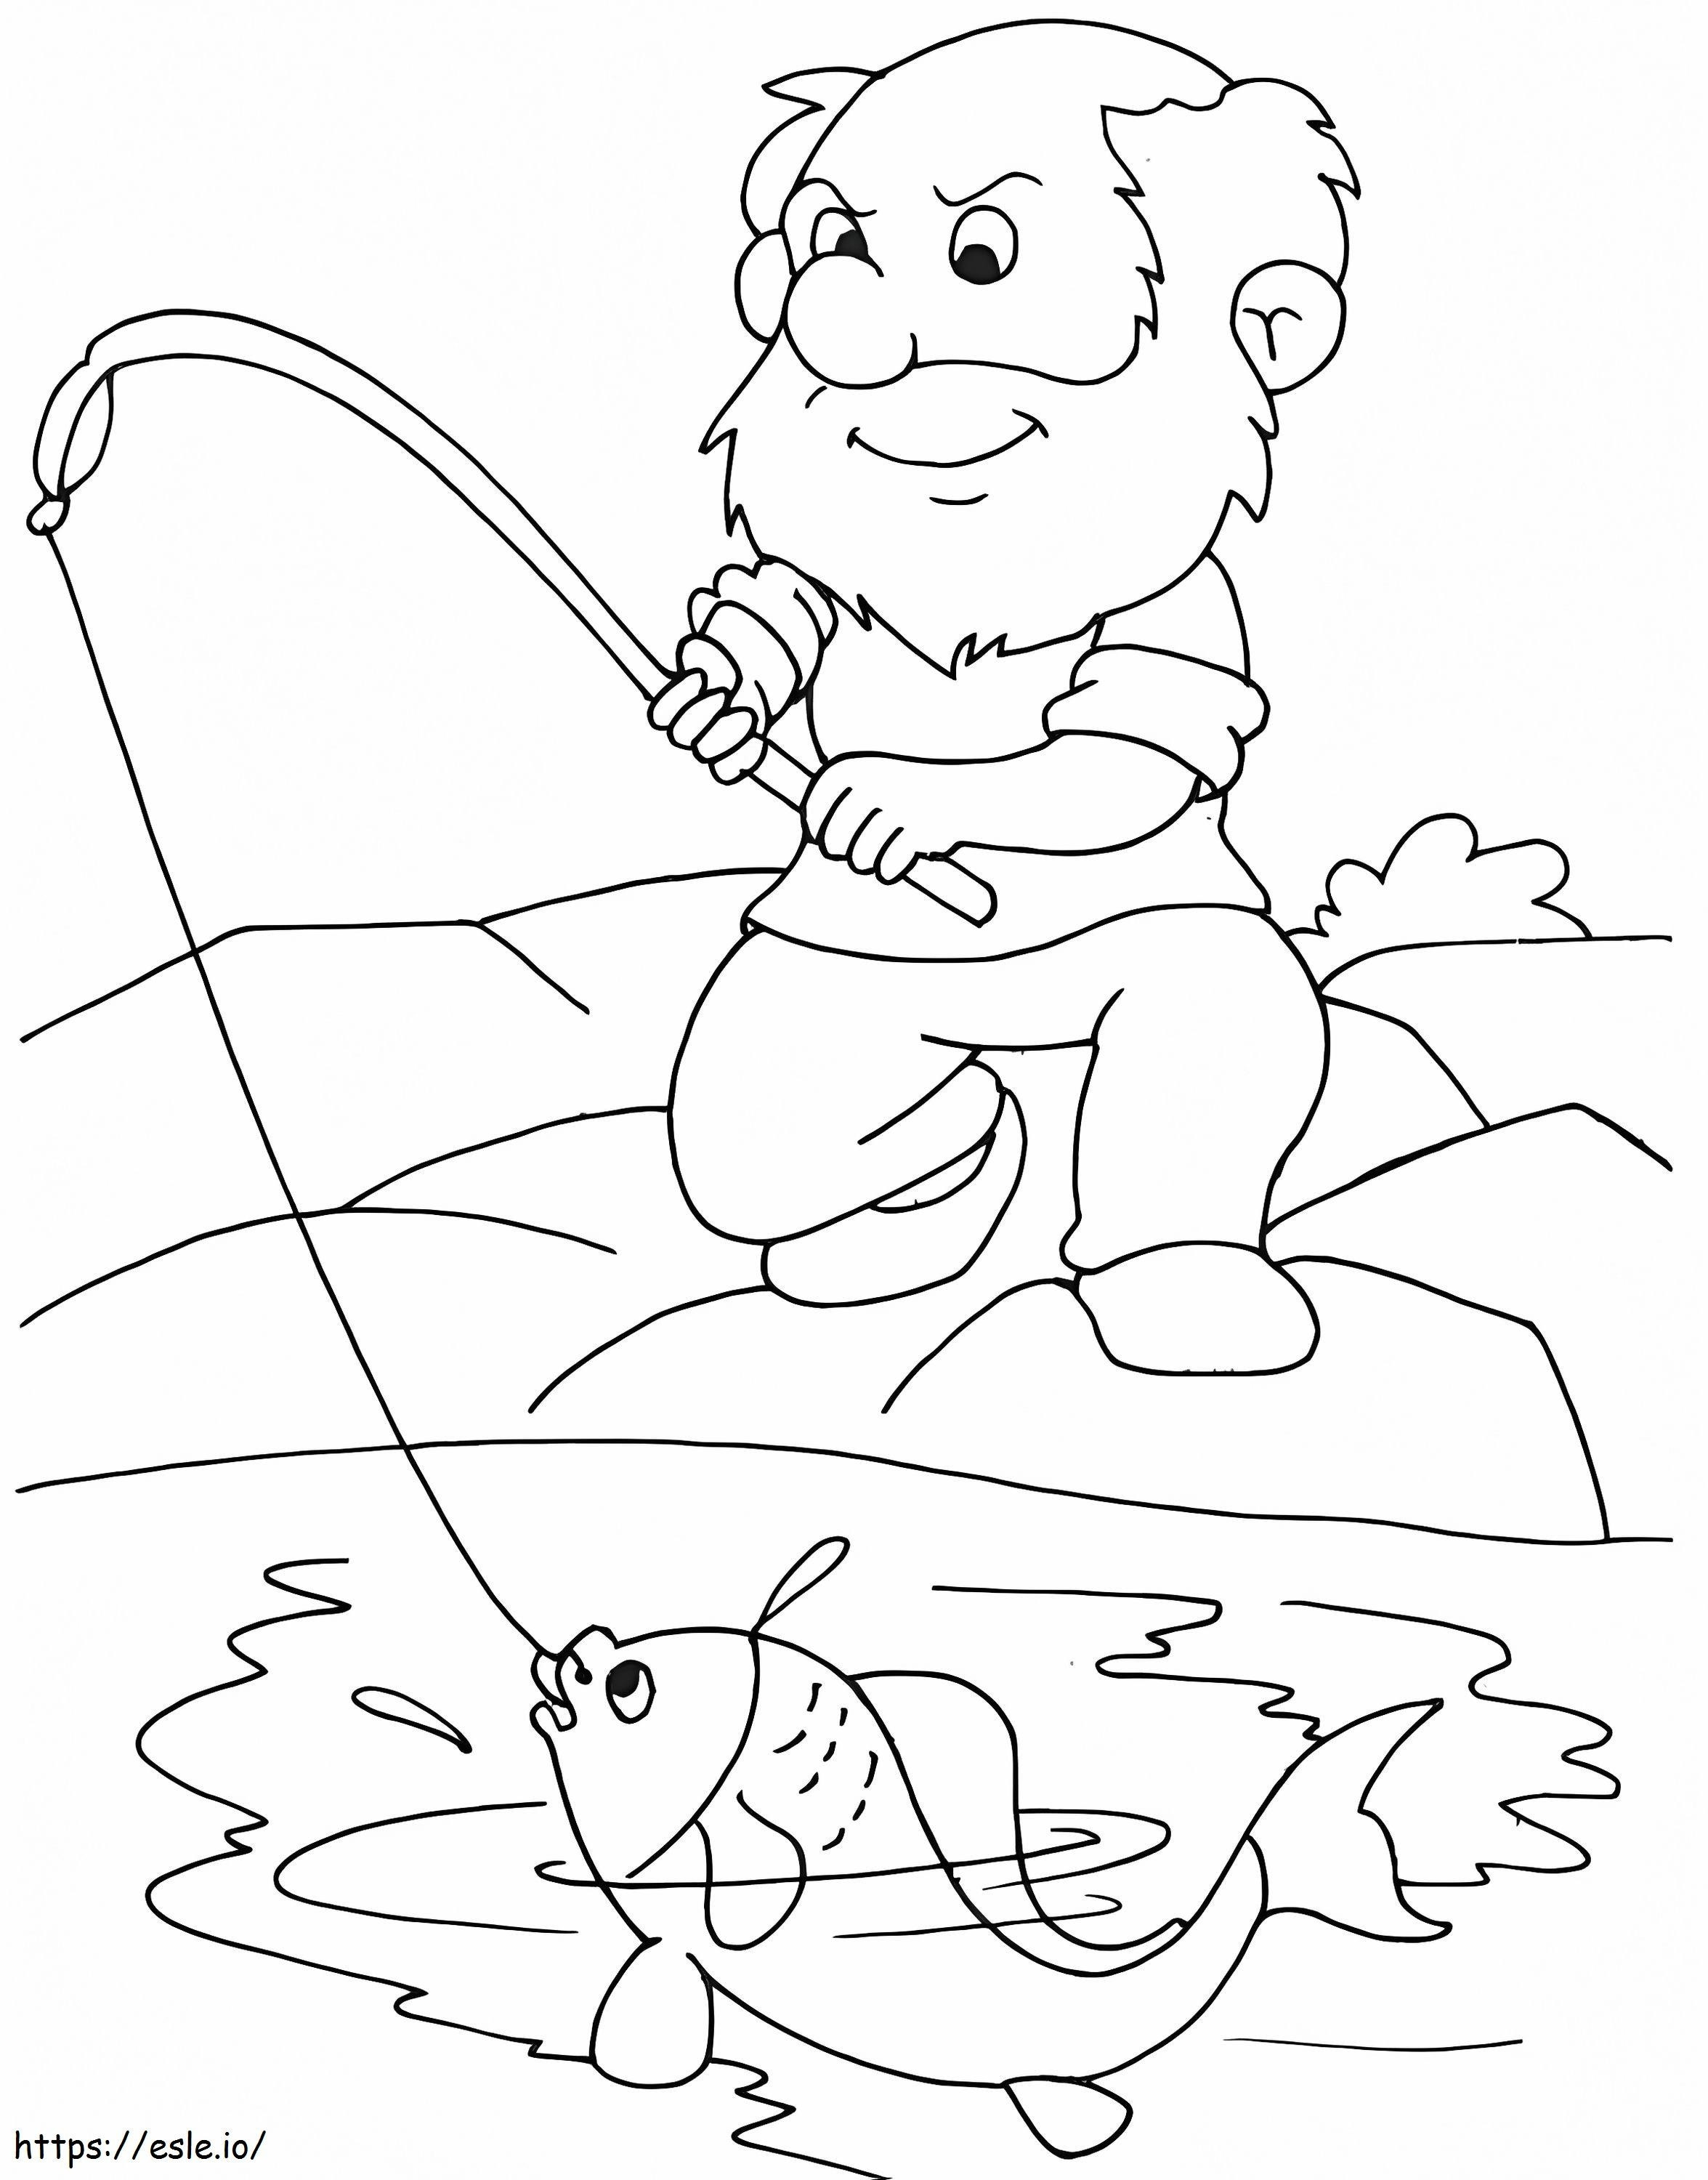 Dwarf Fishing E1649063670110 coloring page